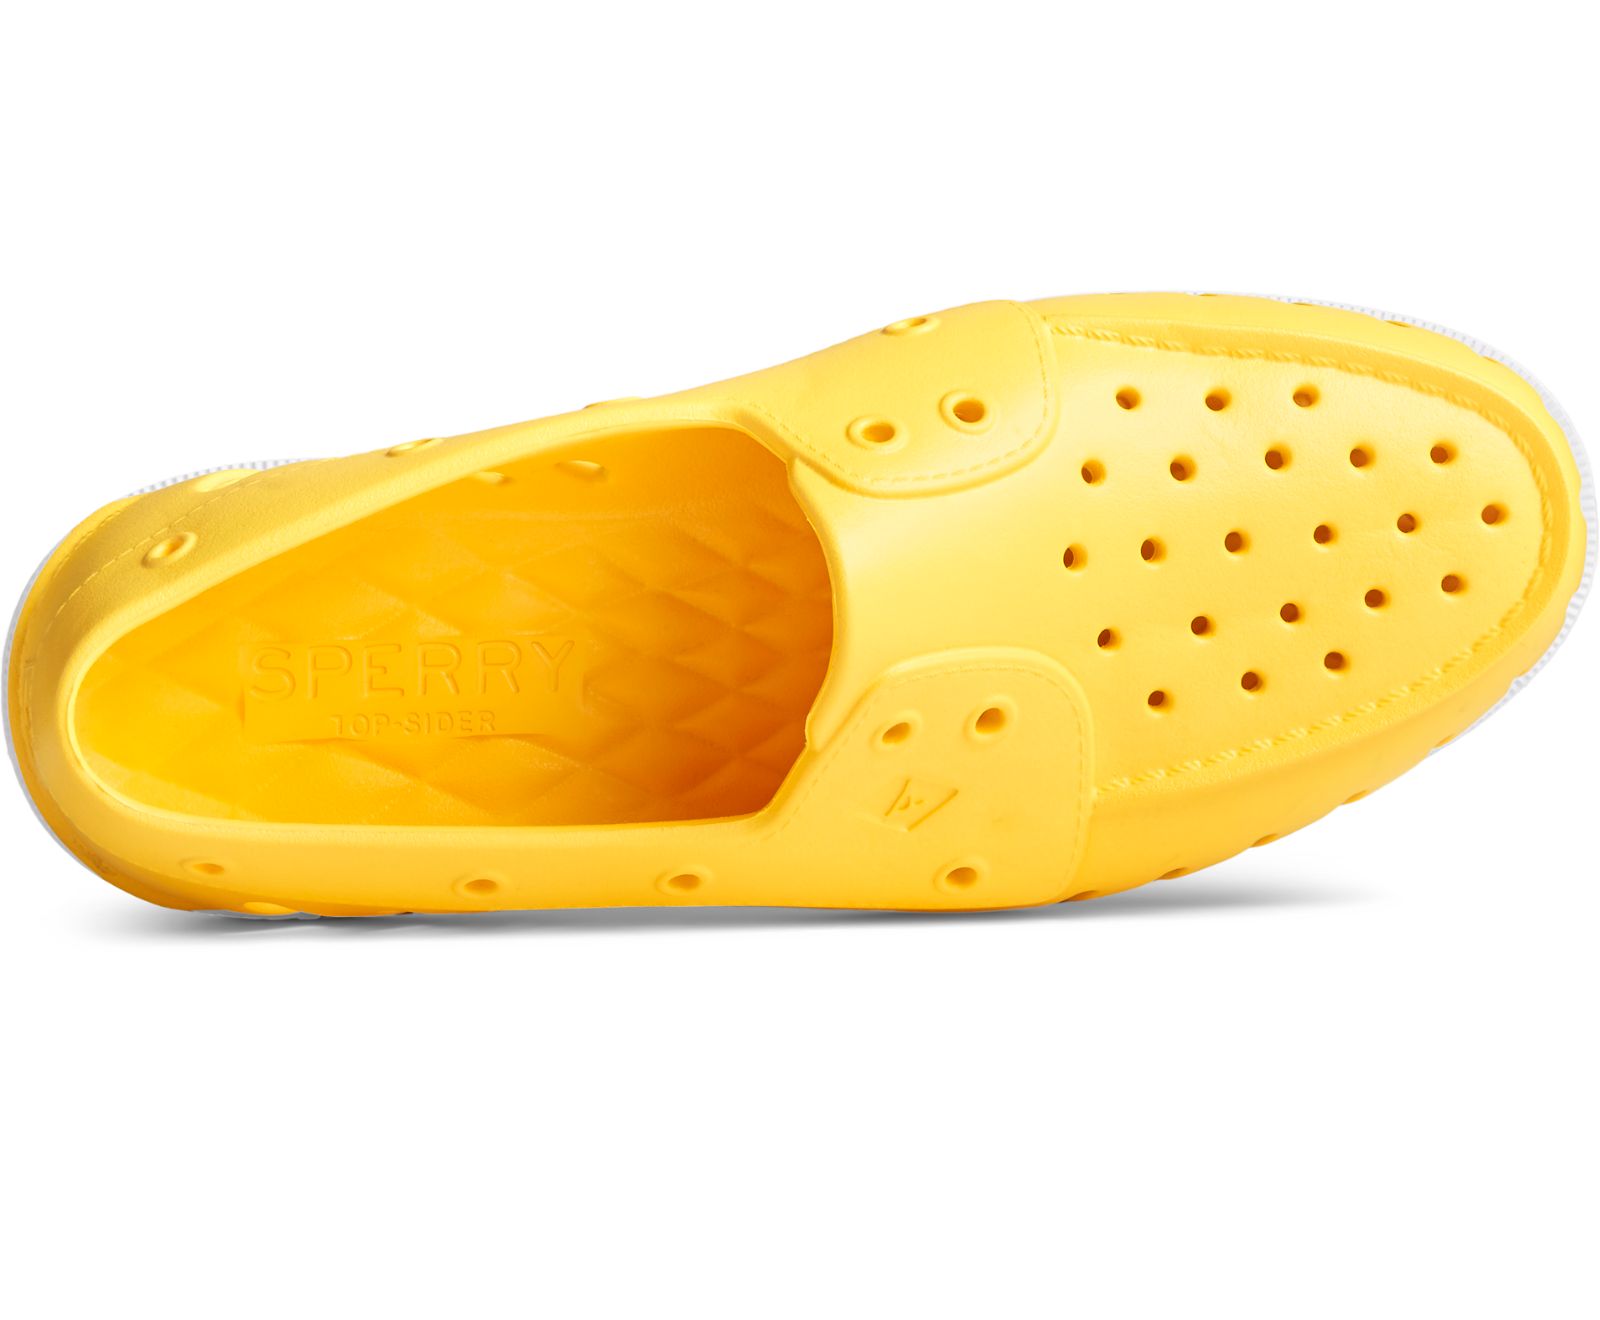 Women's Authentic Original Float Boat Shoe - Yellow